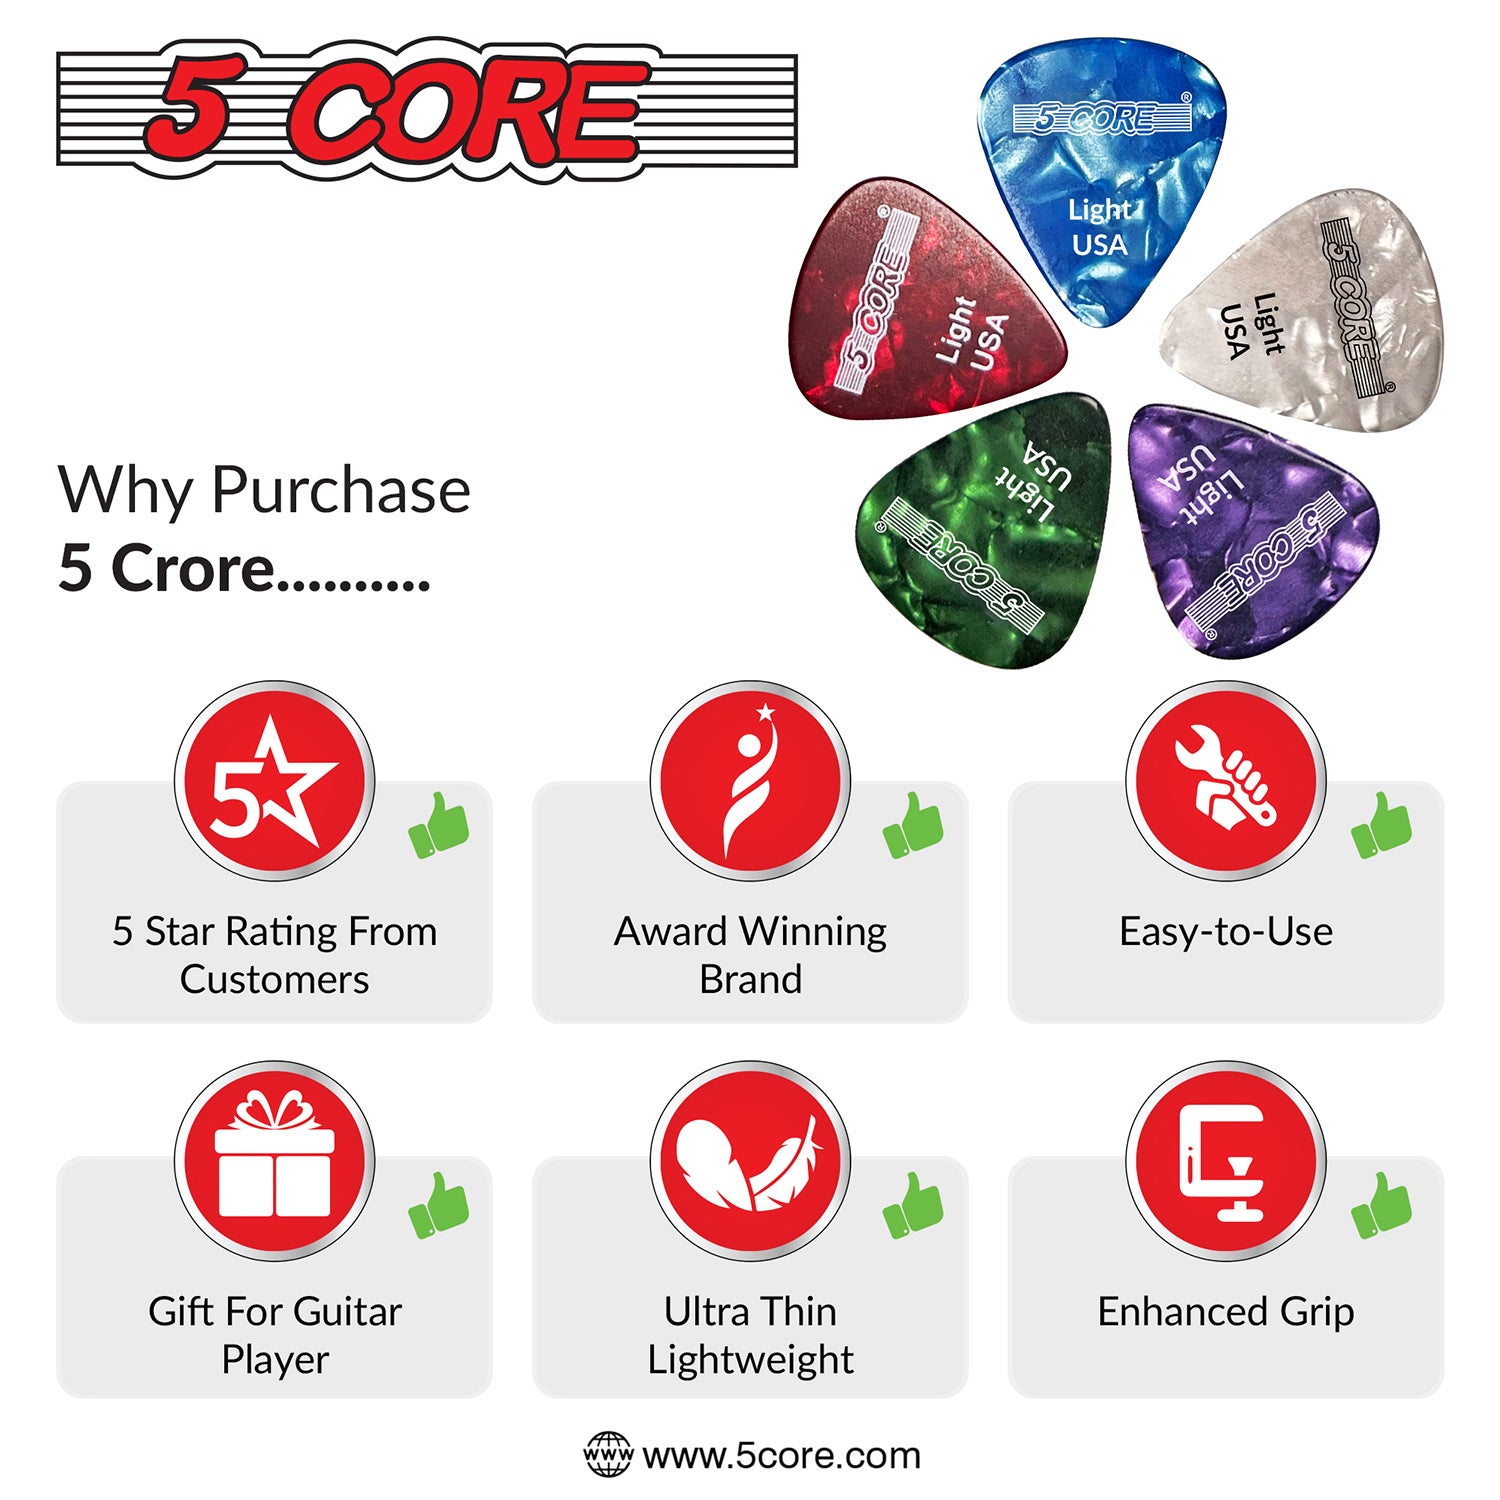 5 Core Celluloid Guitar Picks 20 Pack Light Gauge Plectrums for Acoustic Electric Bass Guitars